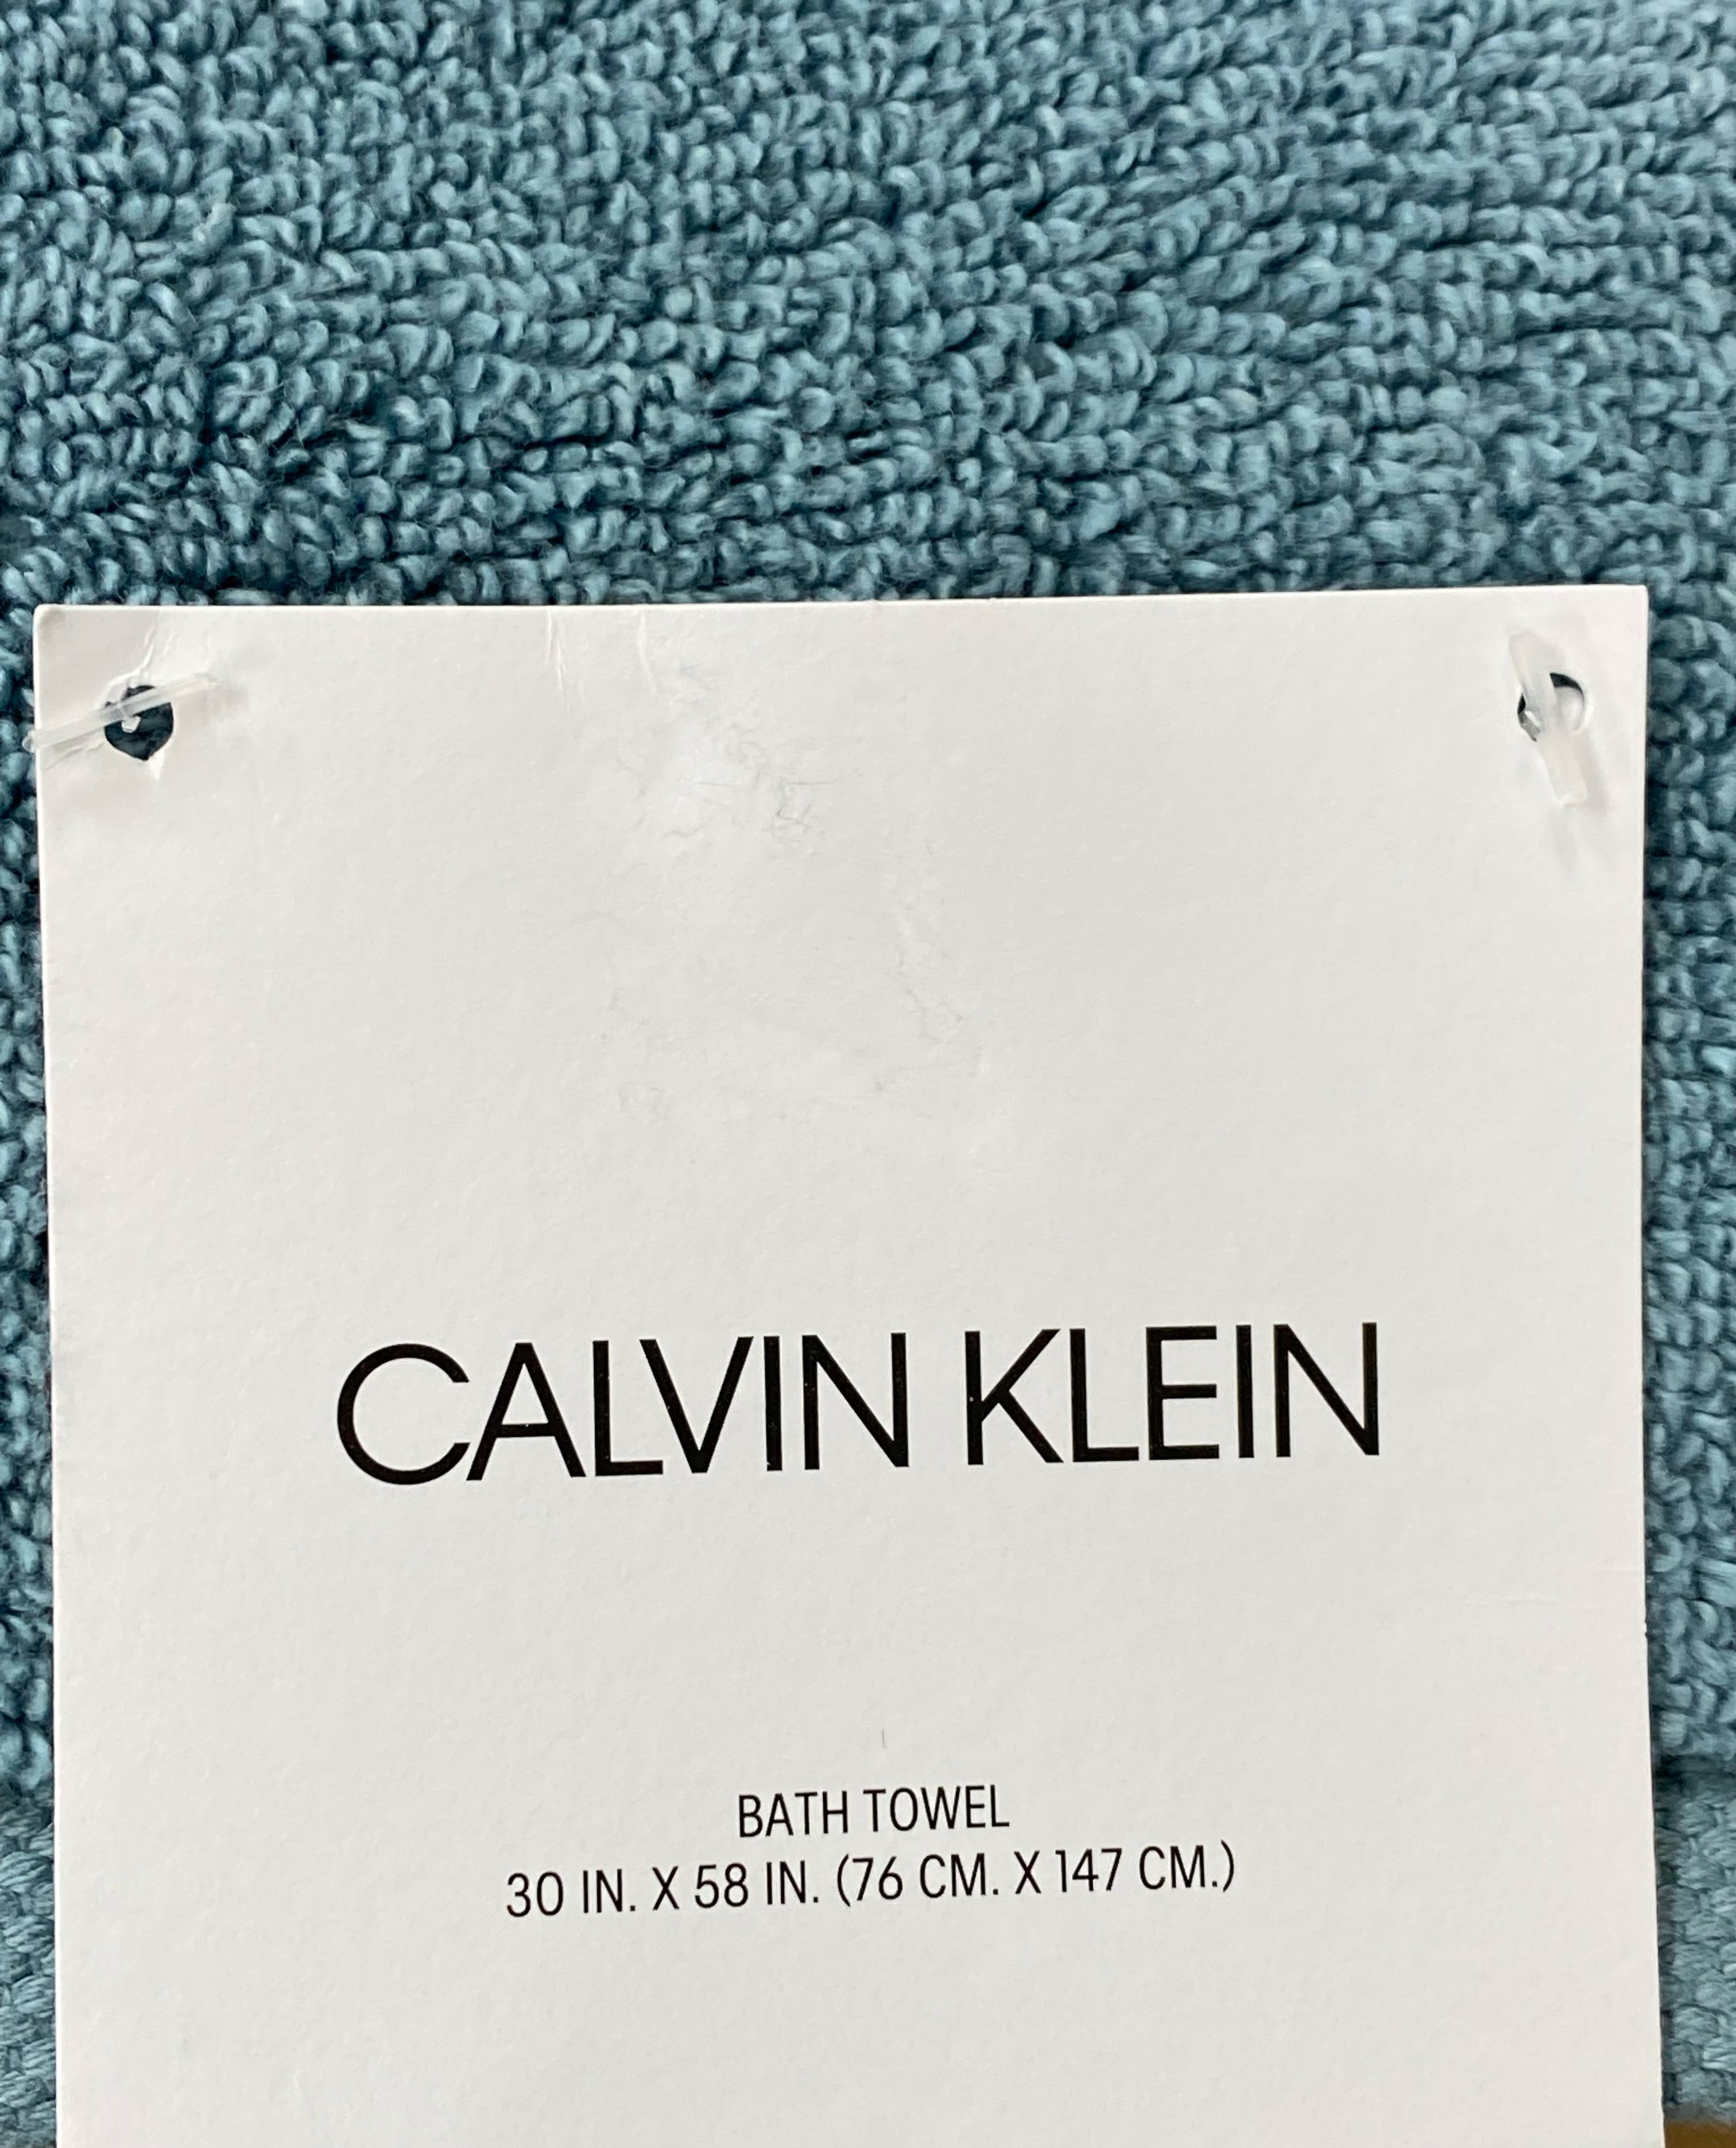 CALVIN KLEIN Tracy Cotton Bath Towel - Turquoise Blue 30 W x 56